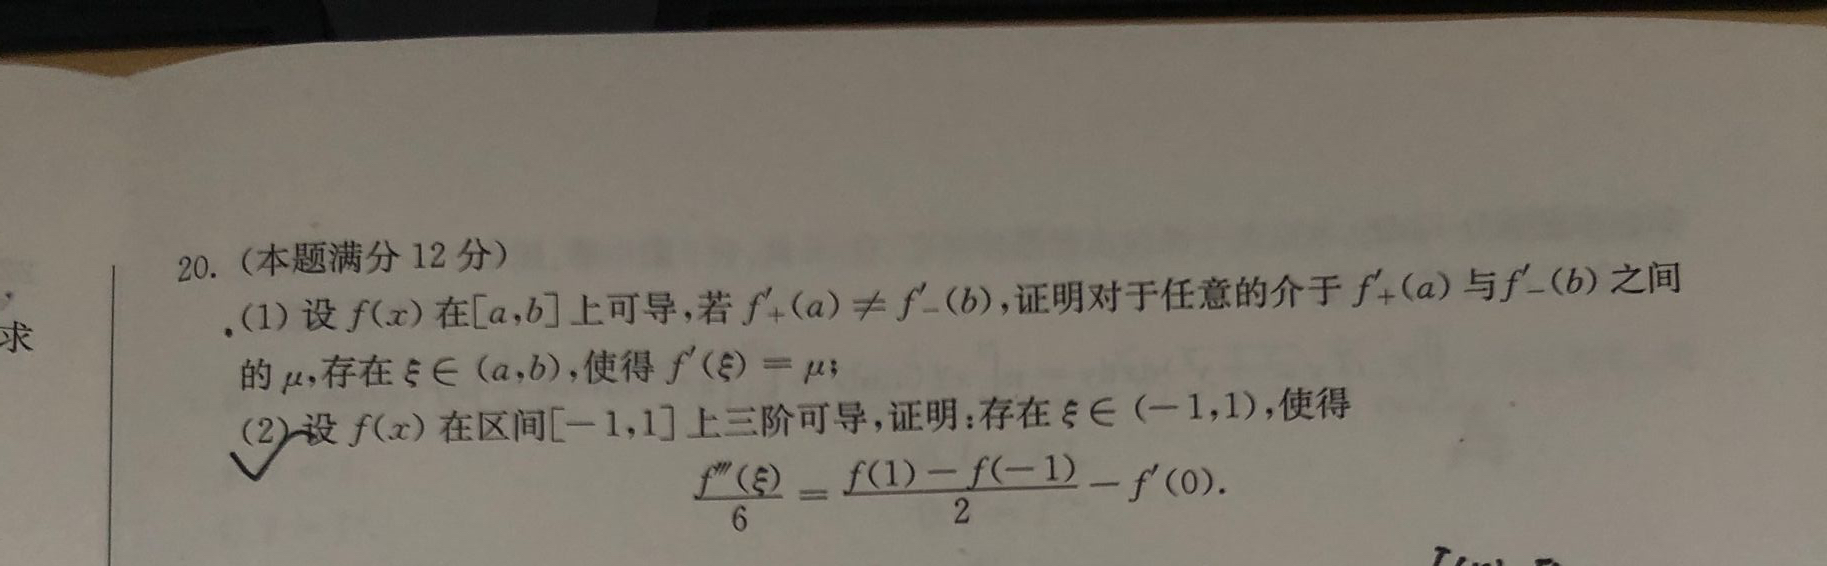 '></div><hr><h3>老师回复问题</h3>必须用达布定理，因为题目里面并没有说f